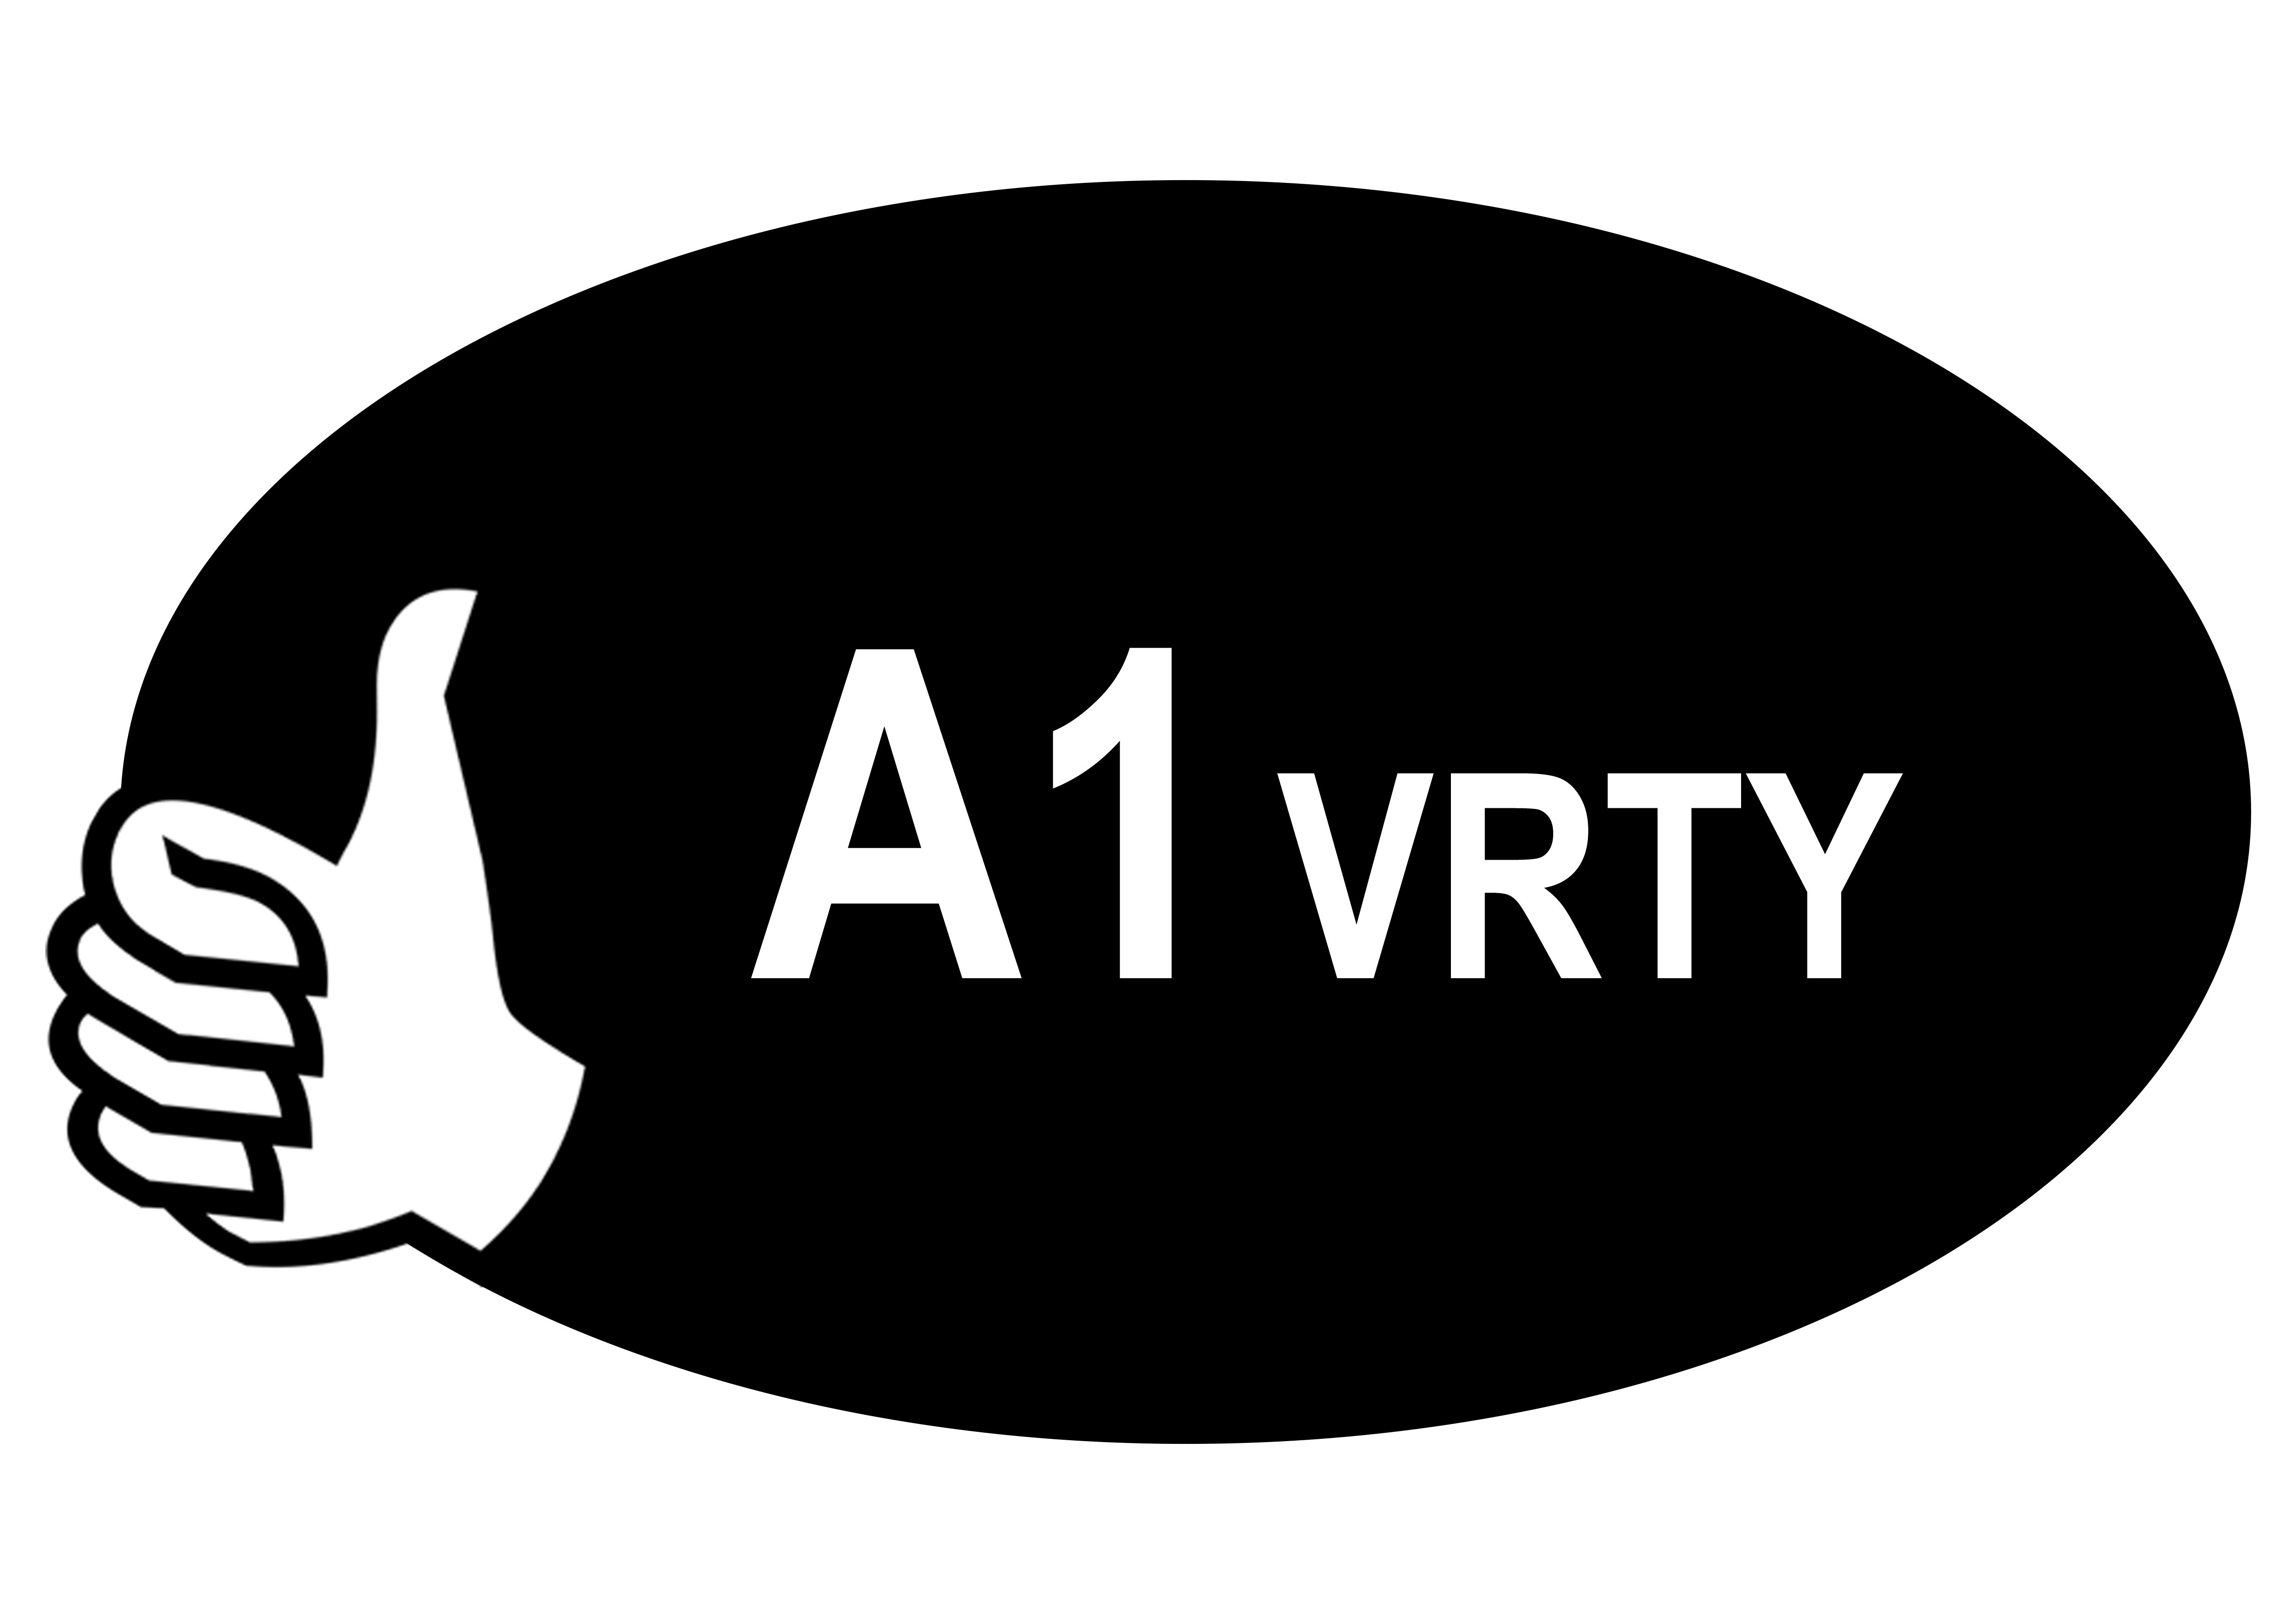 A1 VRTY